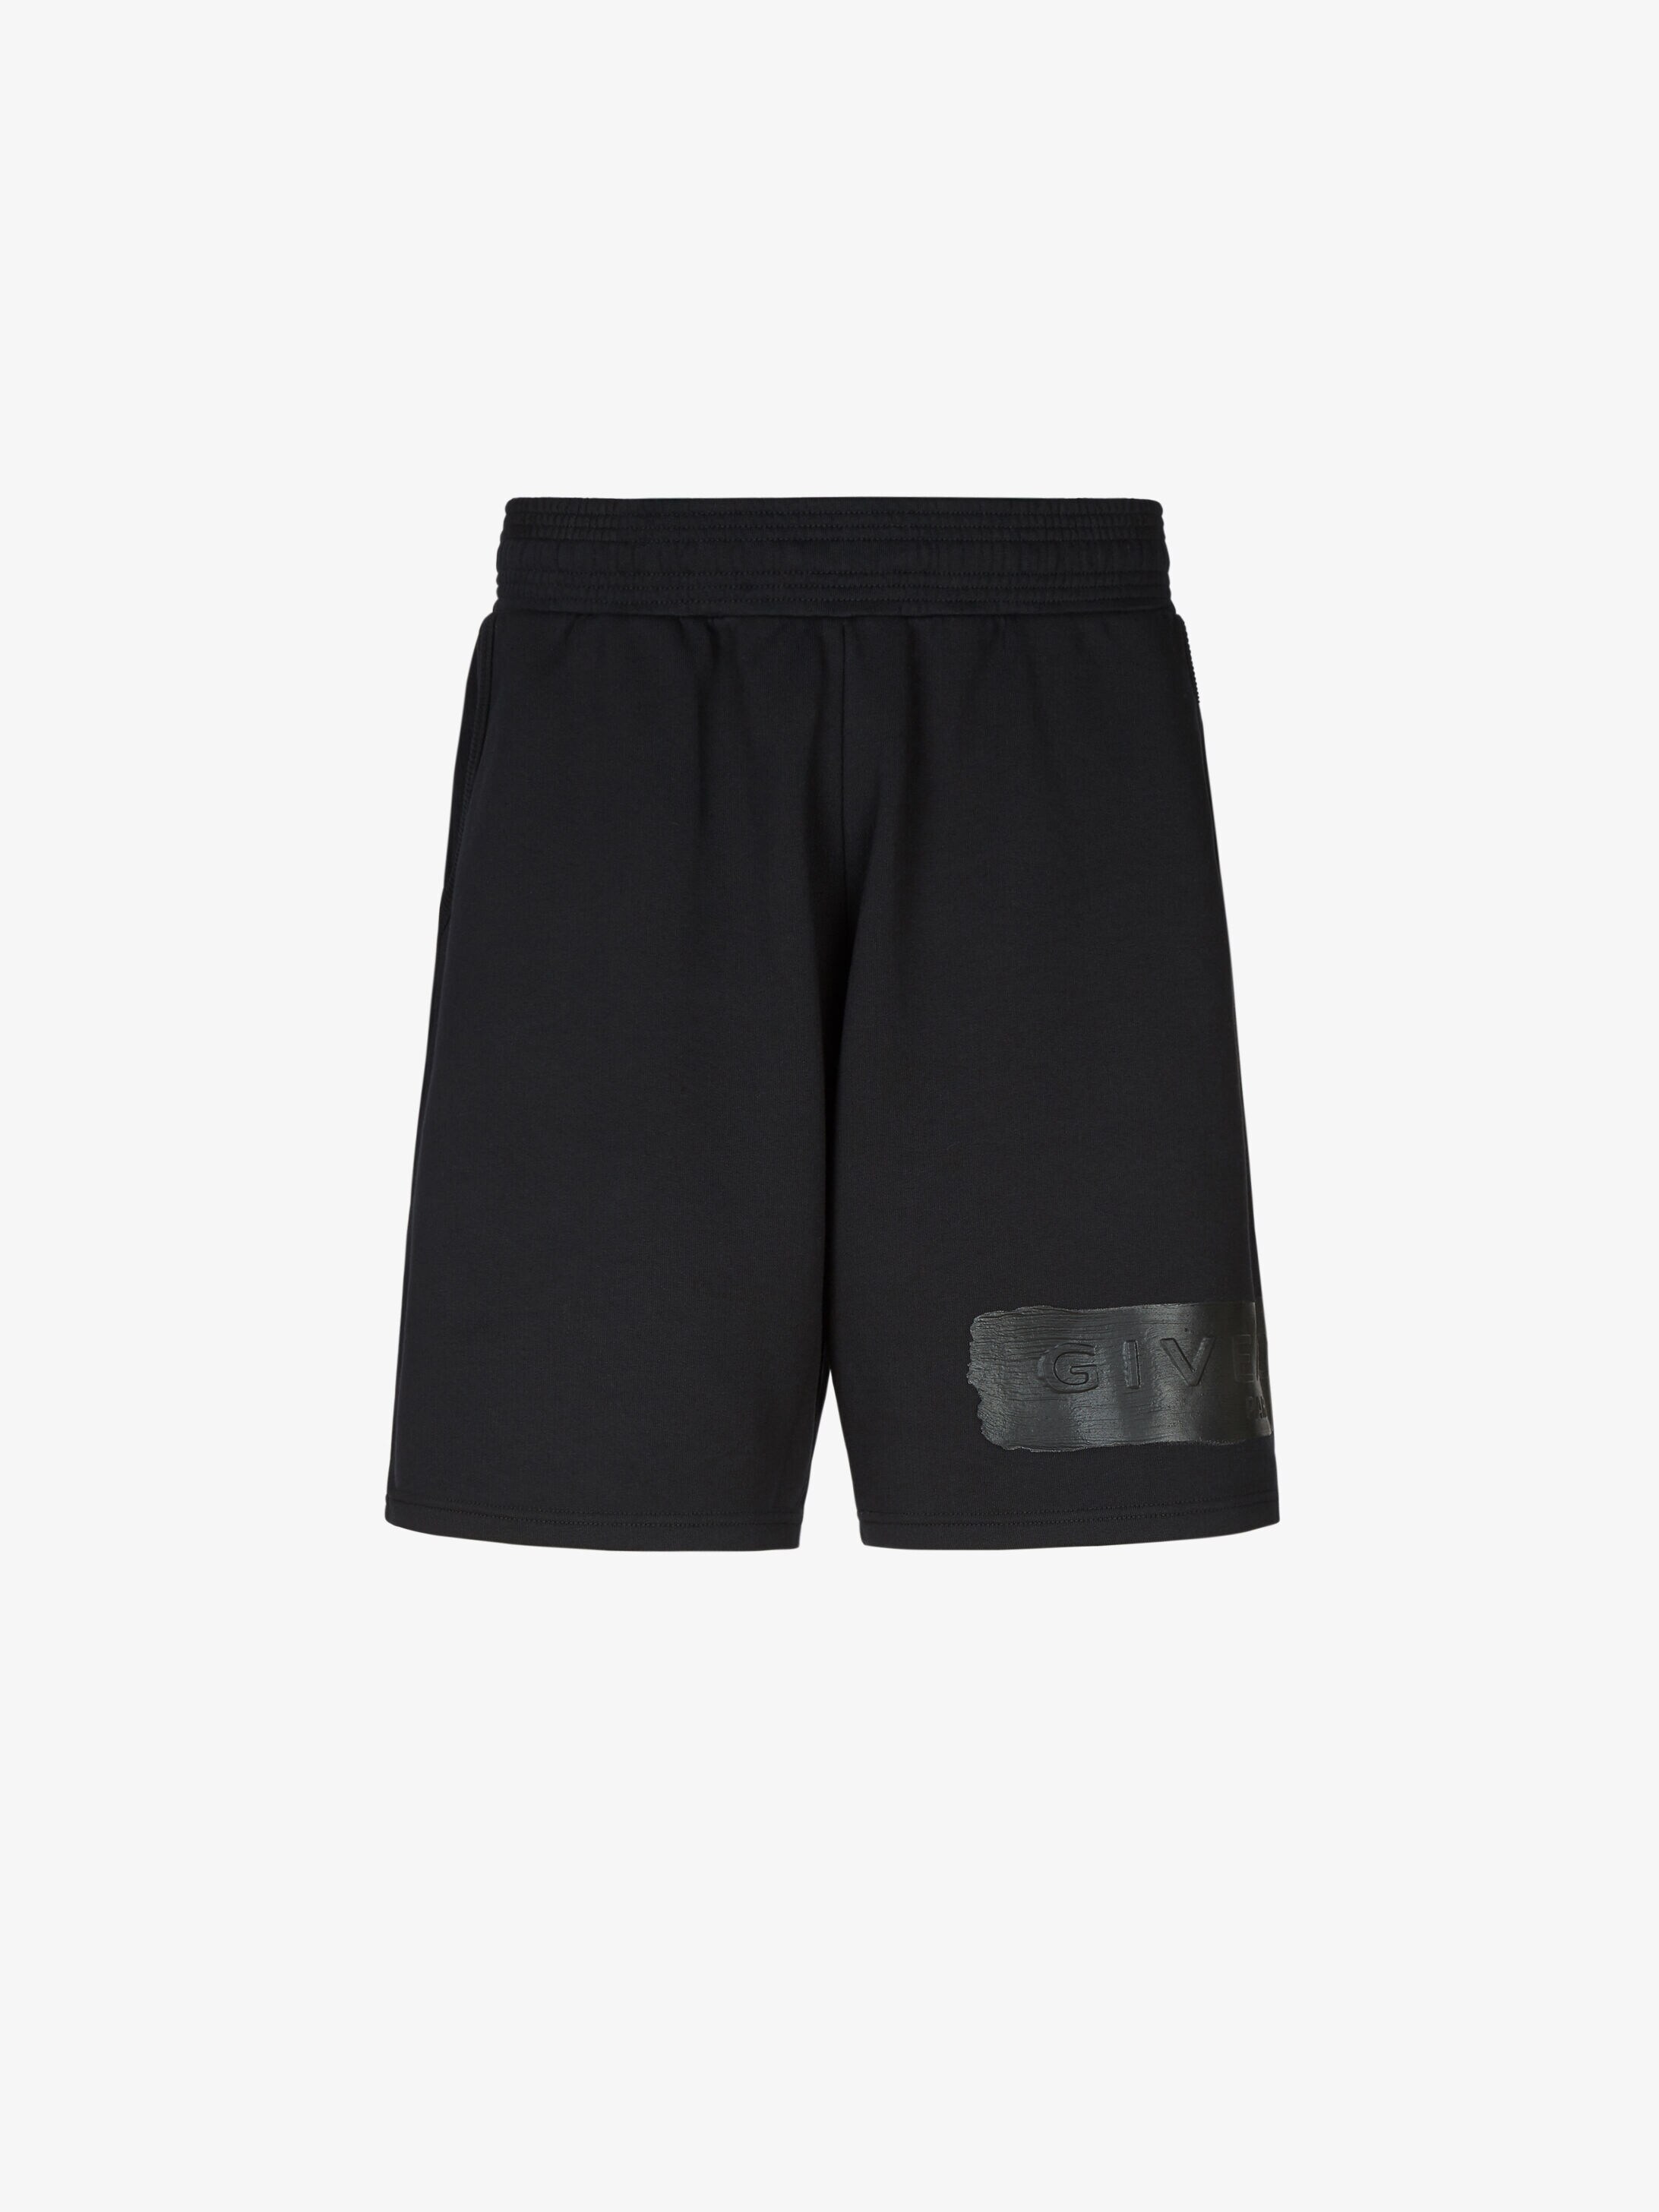 givenchy shorts sale